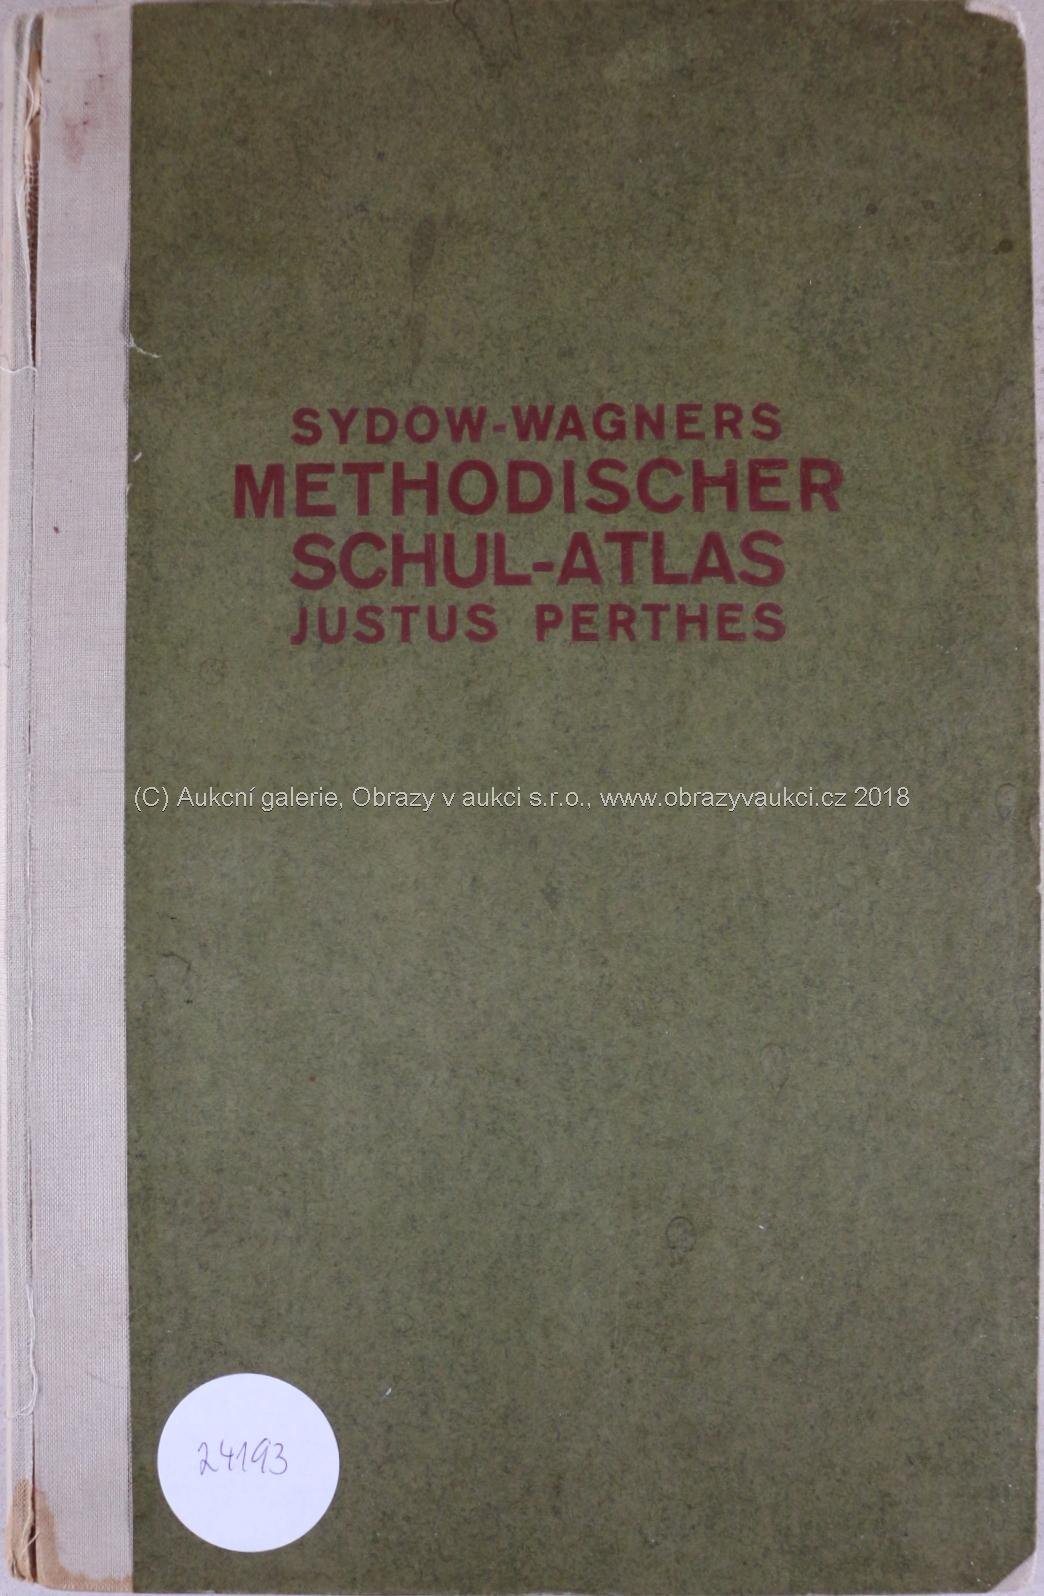 . - Sydow-Wagners Metodischer Schul-Atlas